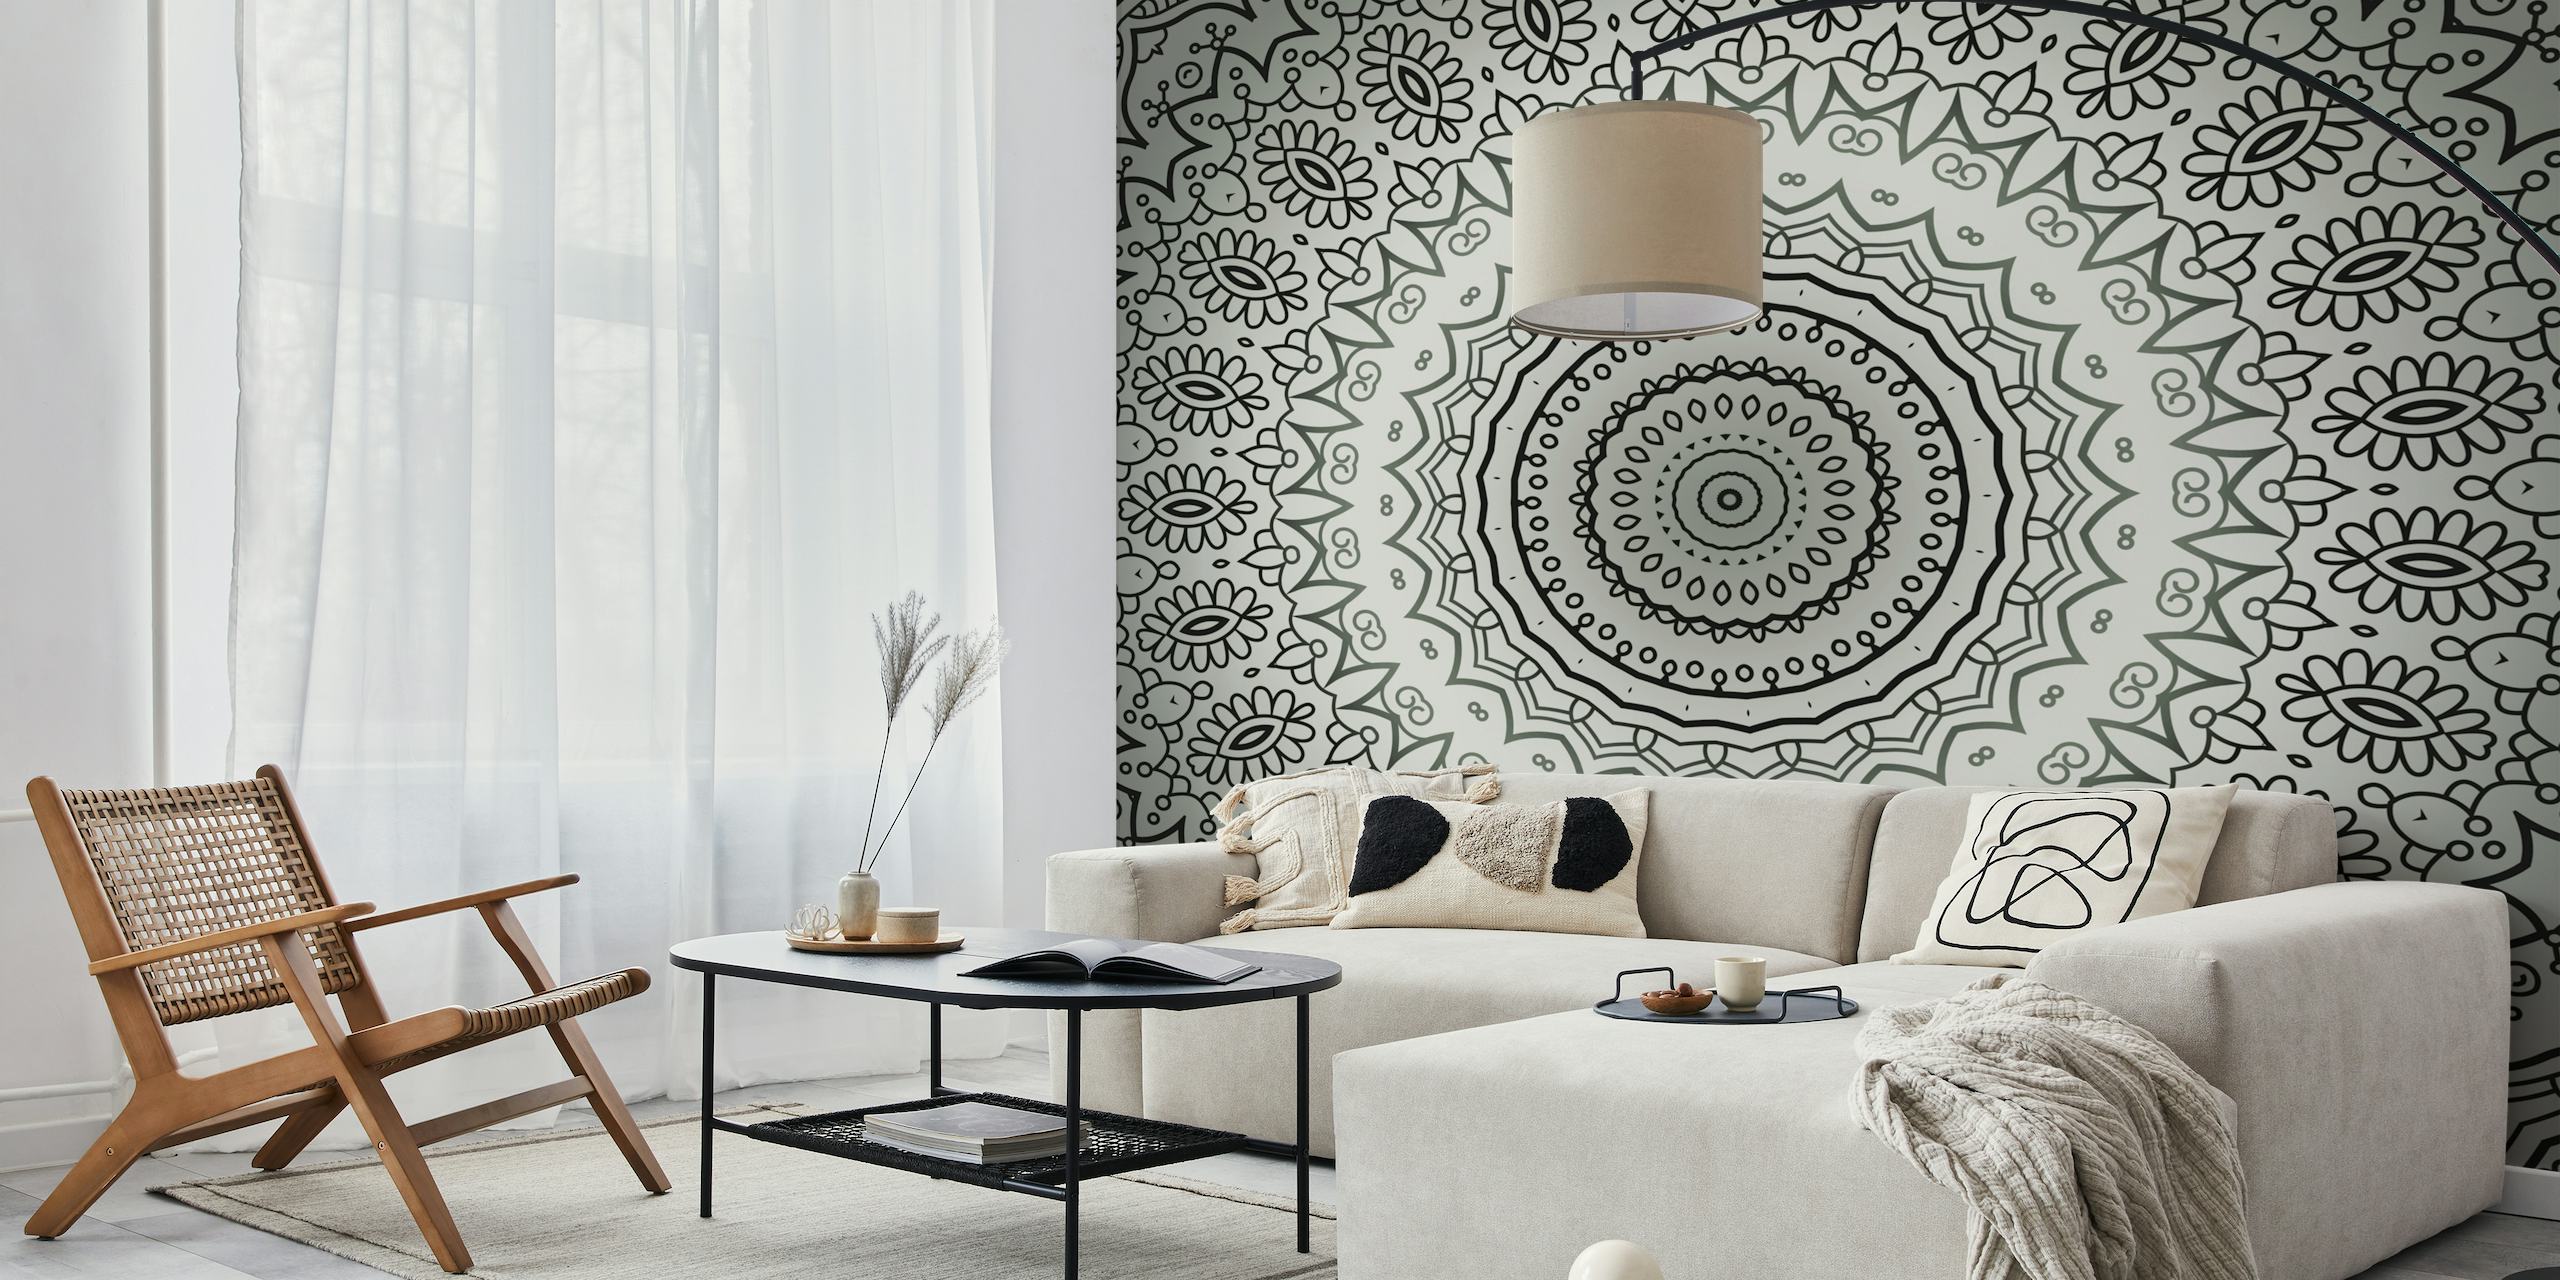 Elegant greyscale mandala wall mural with intricate patterns